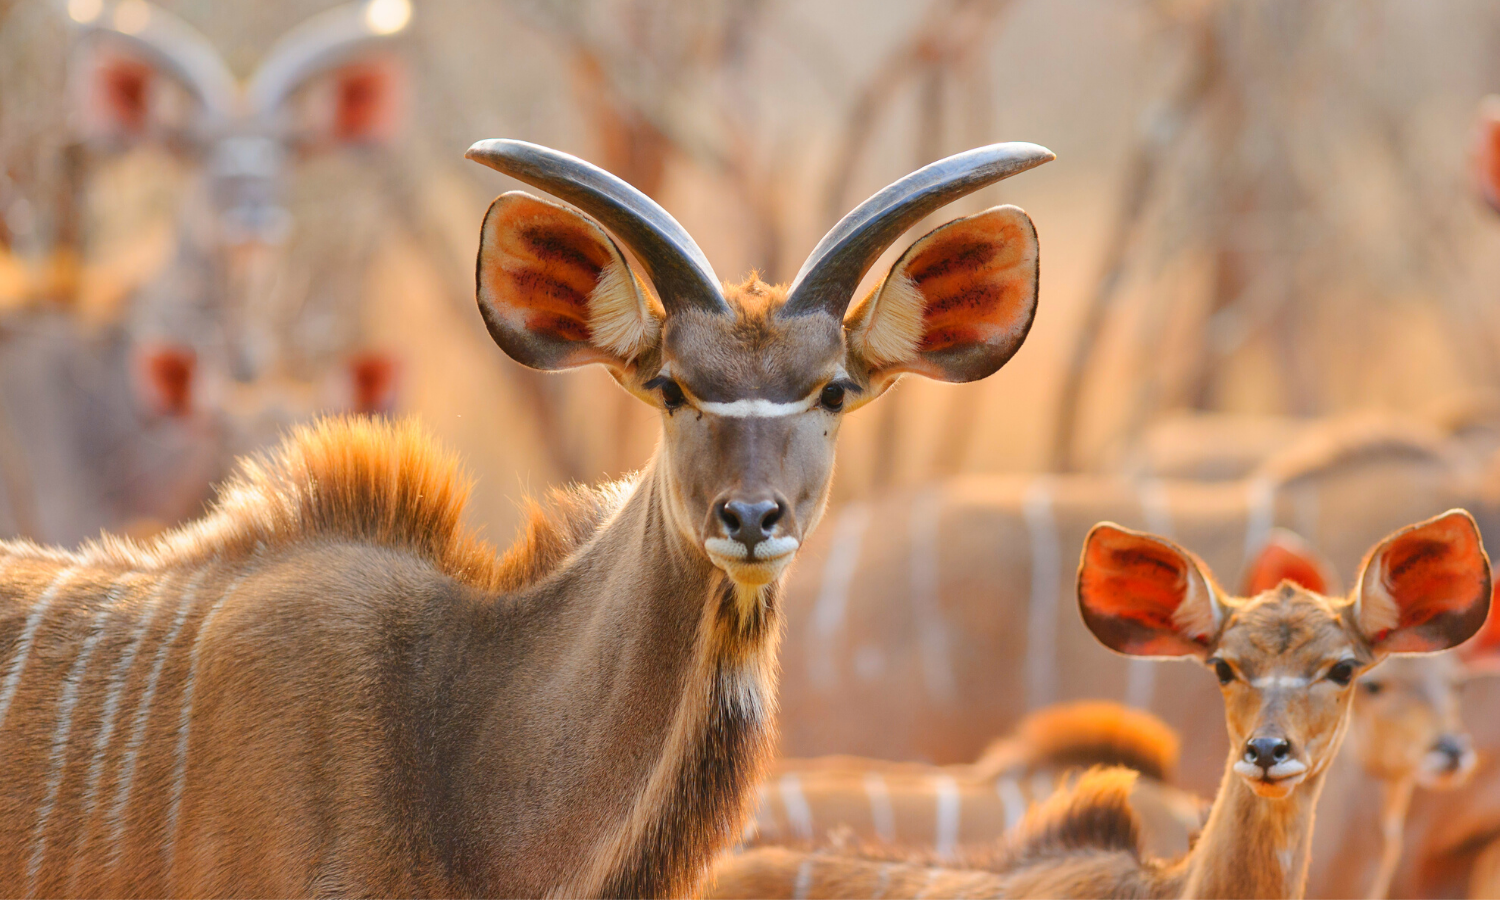 antelope in botswana